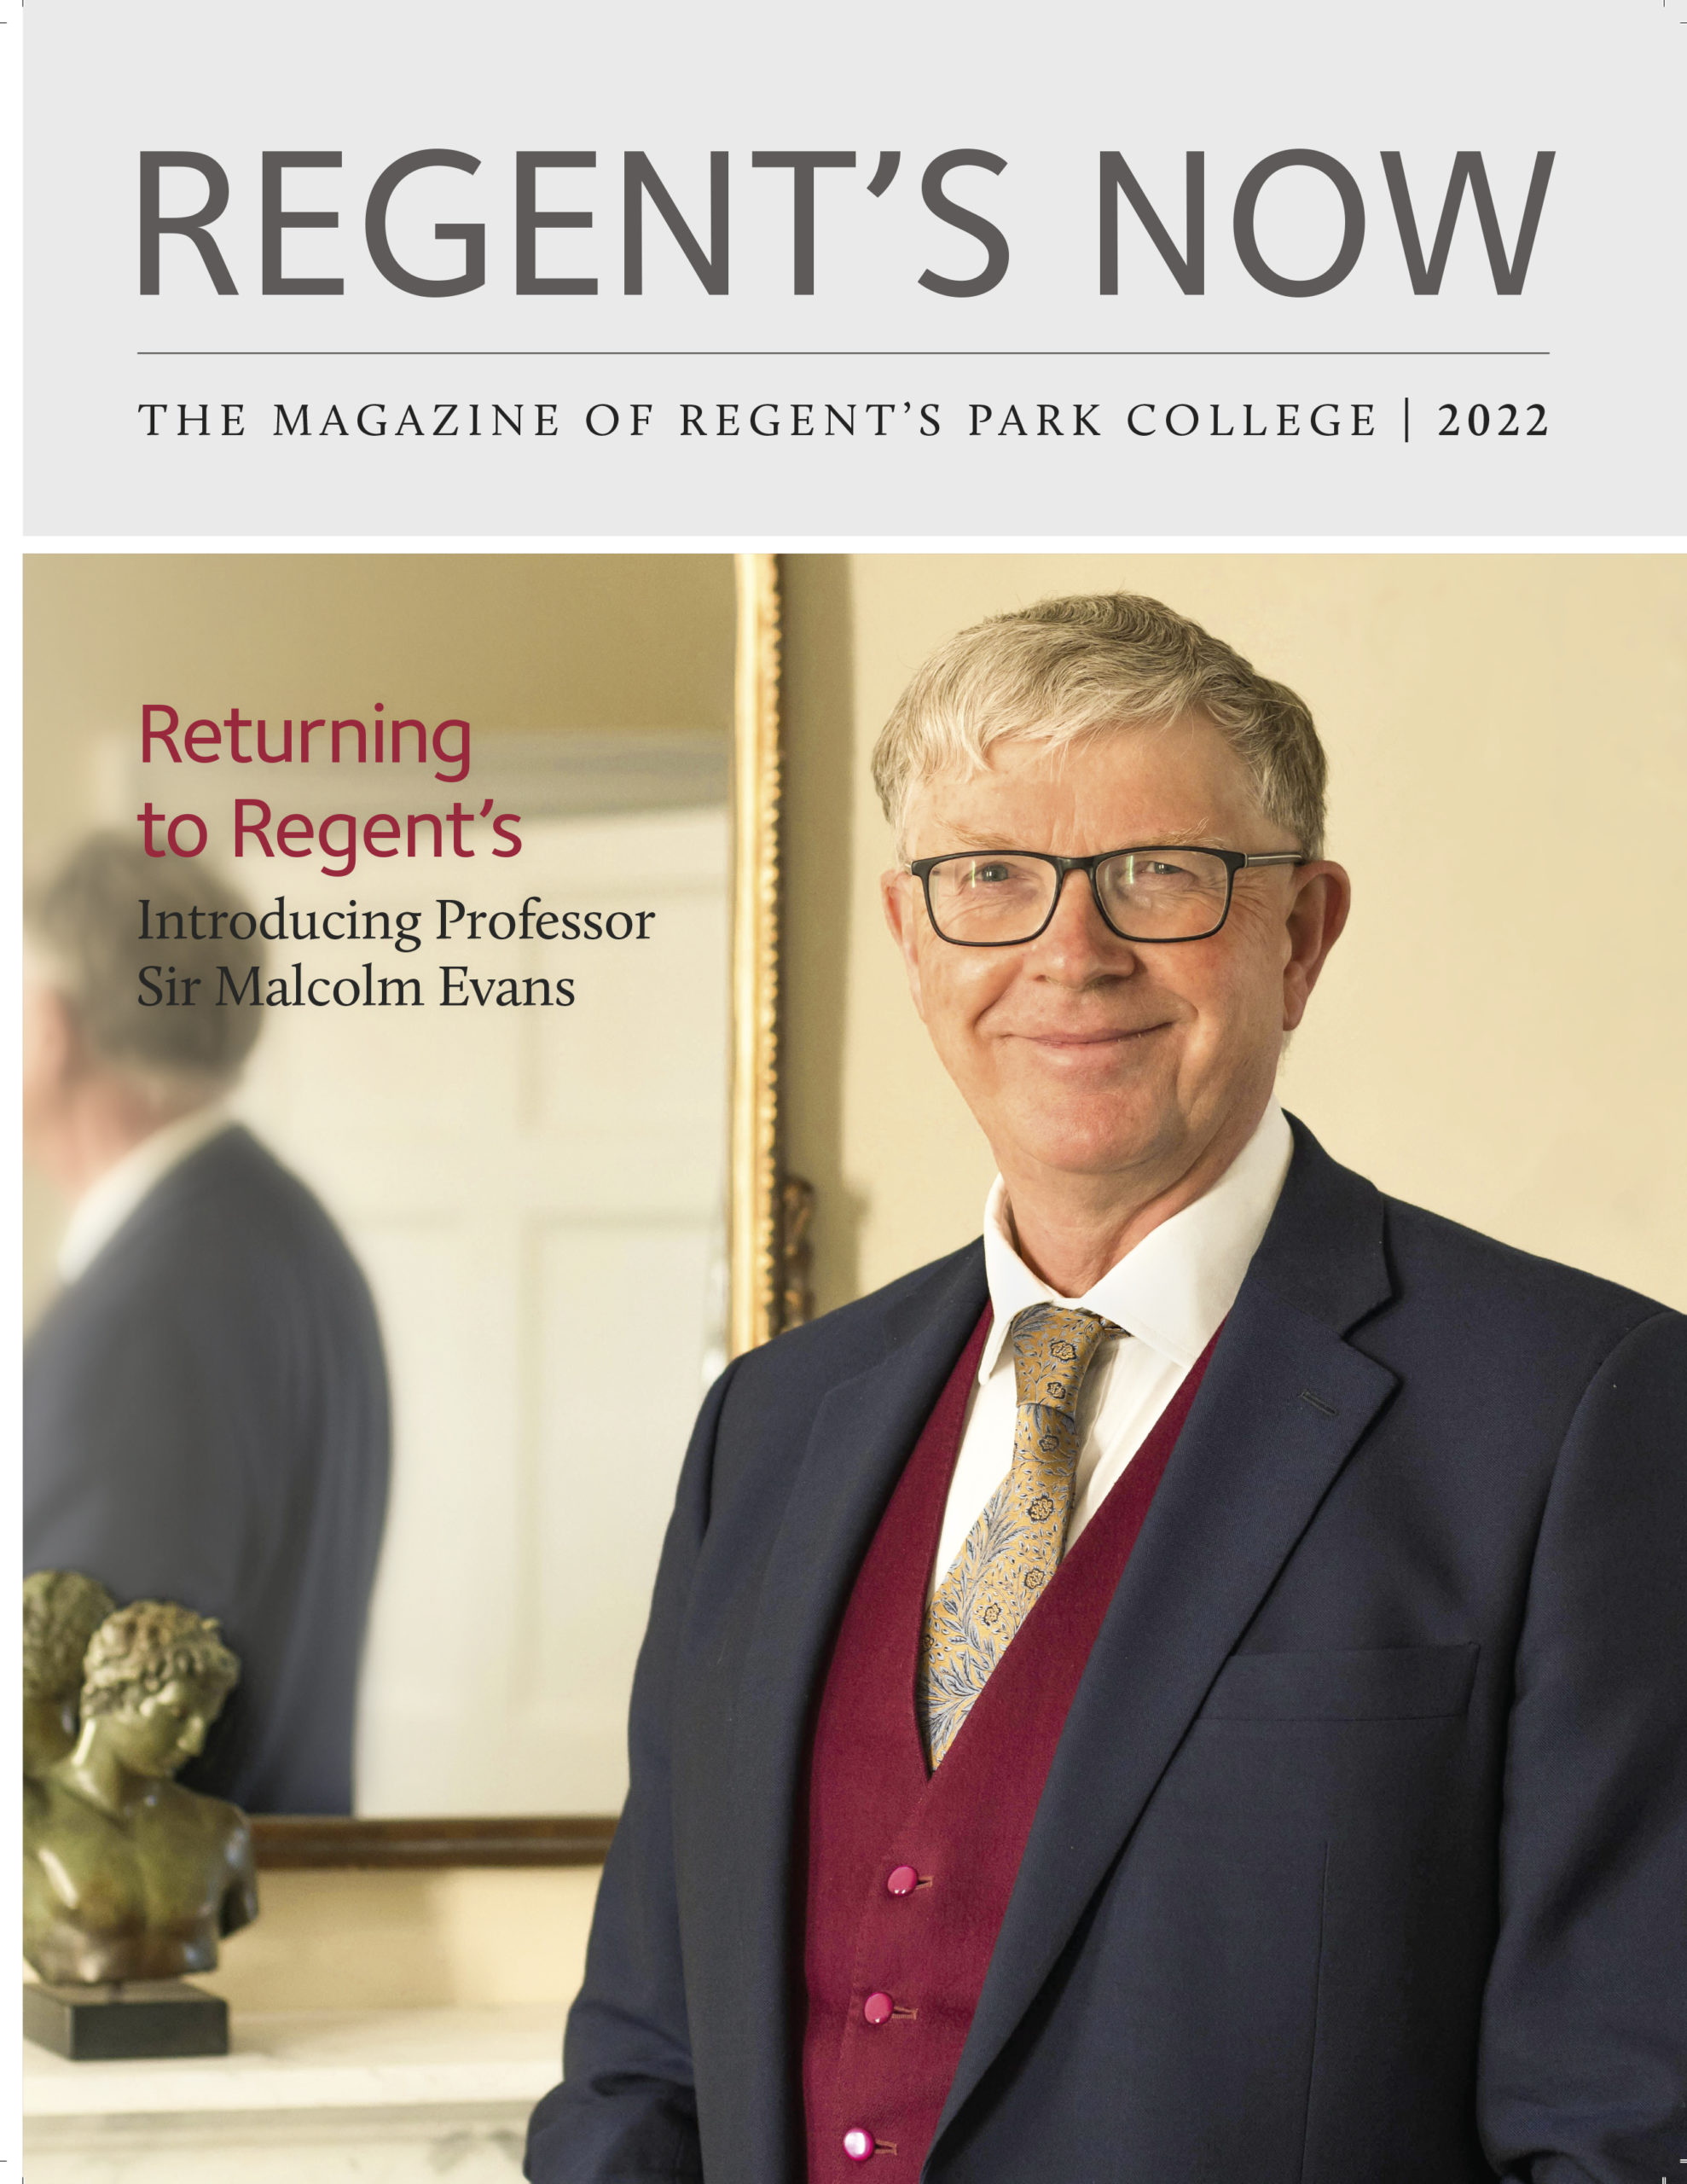 RP_Regent's Now 2022_cover